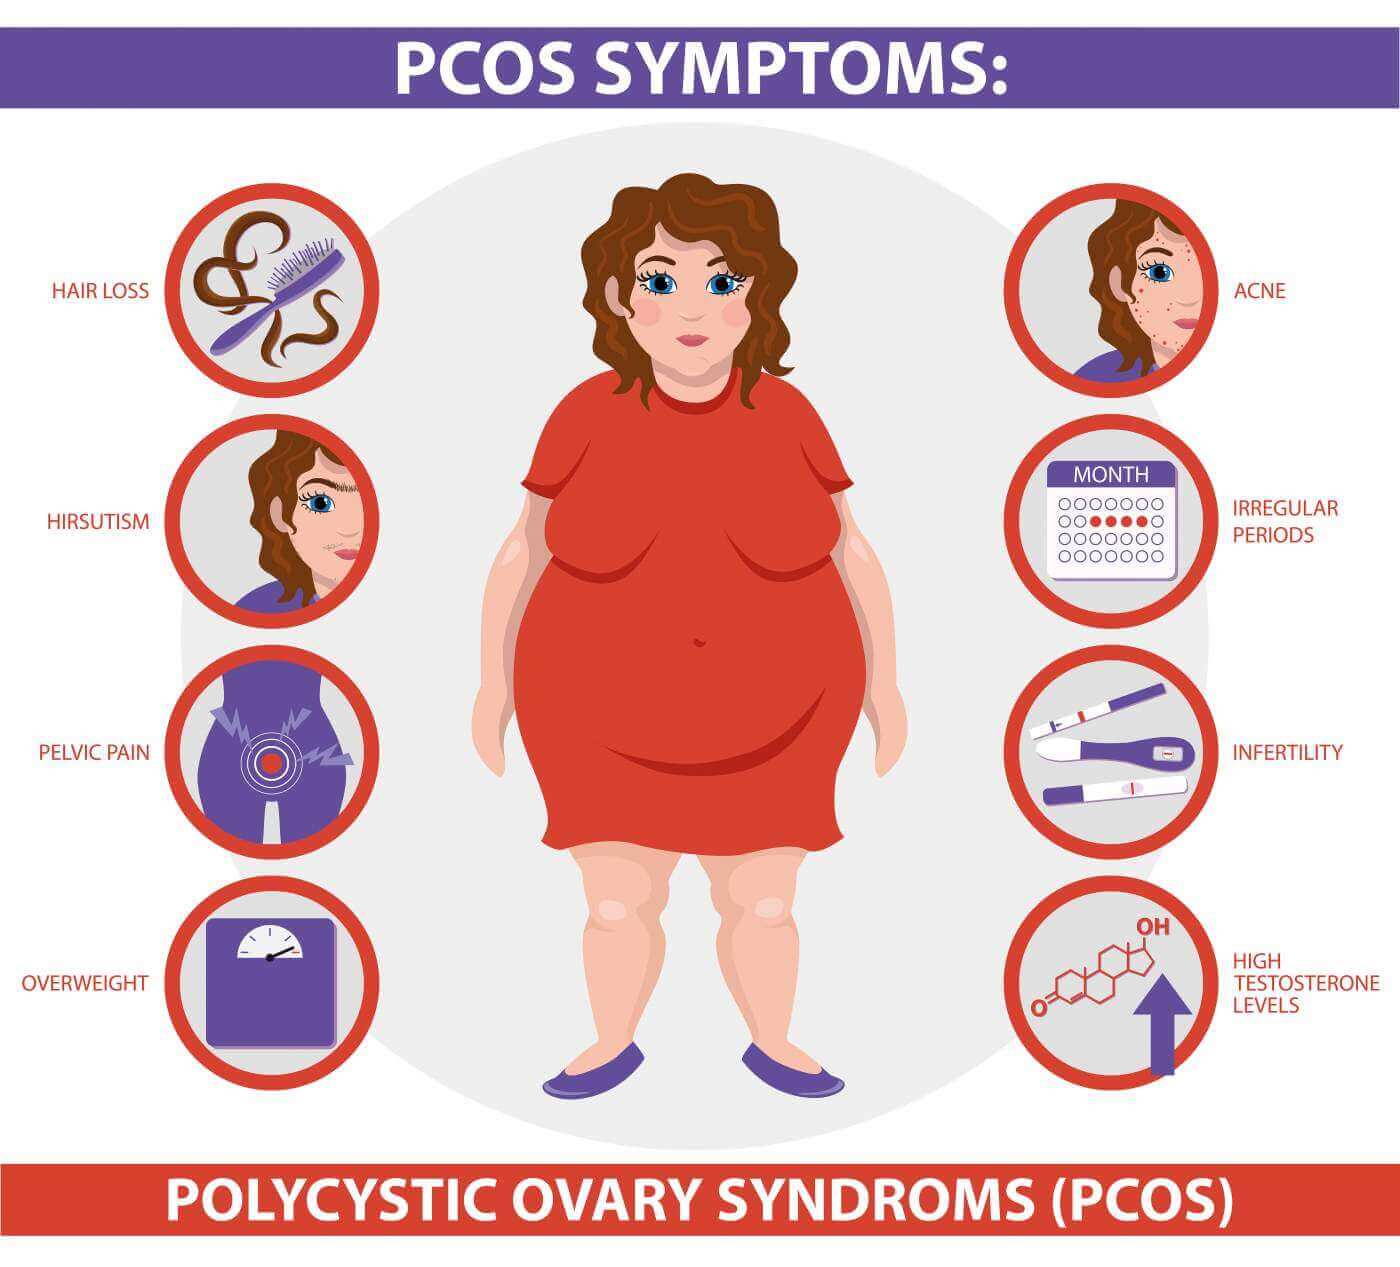 Pcos symptoms infographic